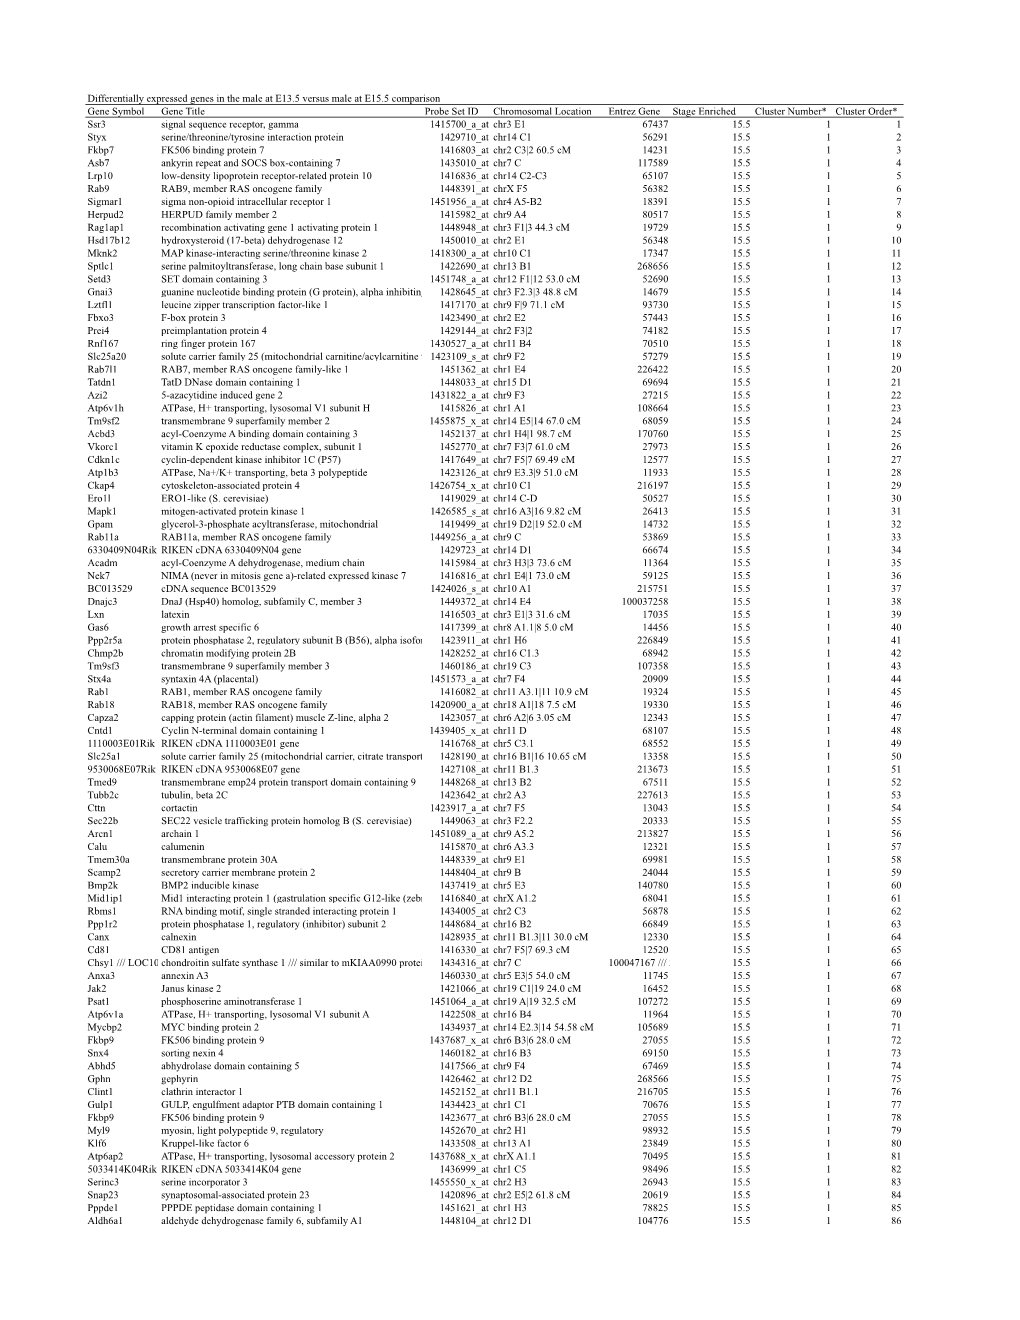 Temporal Male (T5) List of Genes.Xlsx